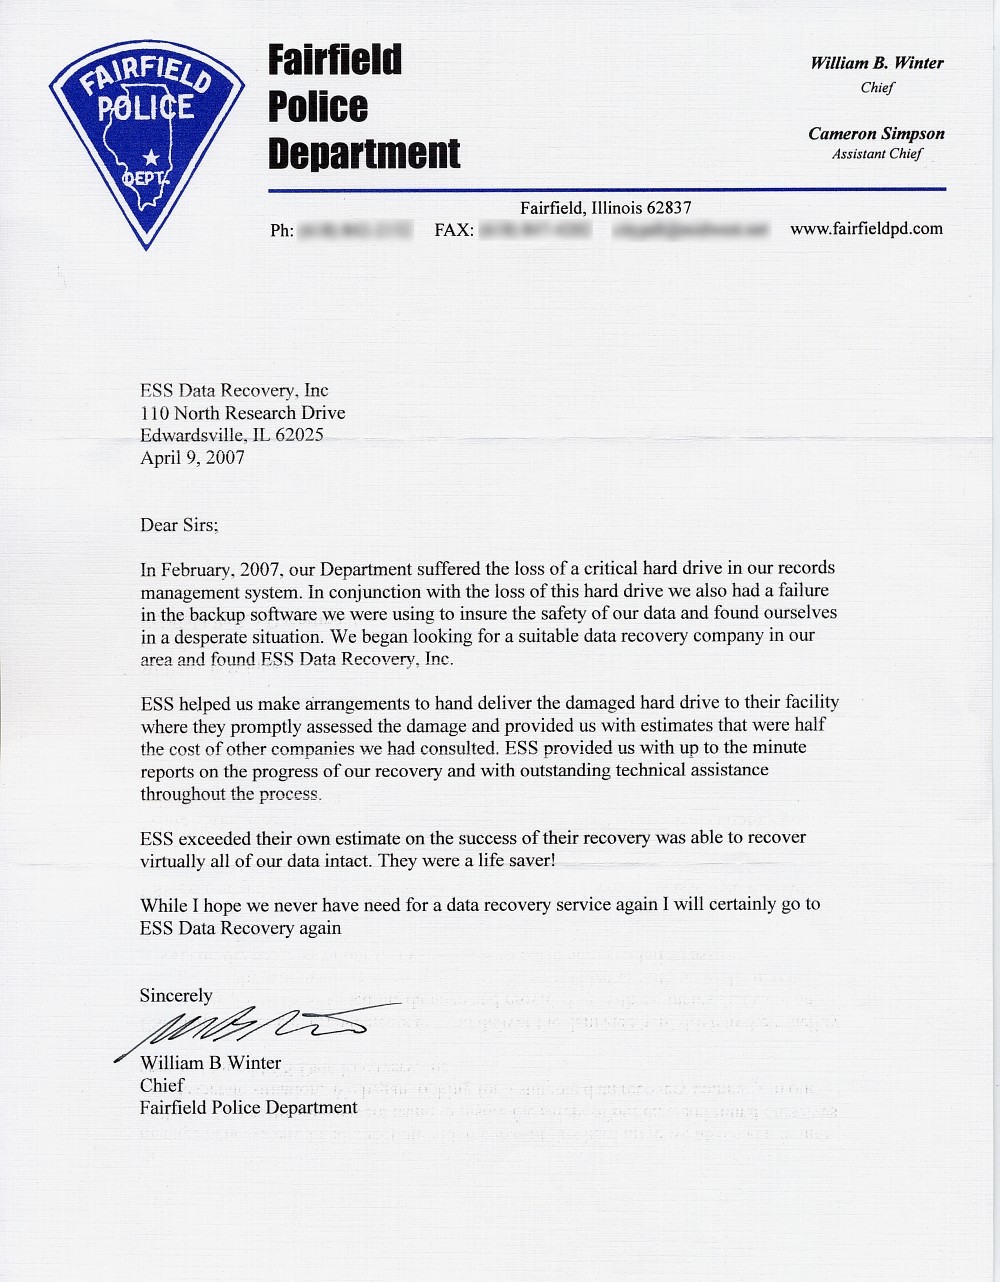 Fairfield Police Department testimonial